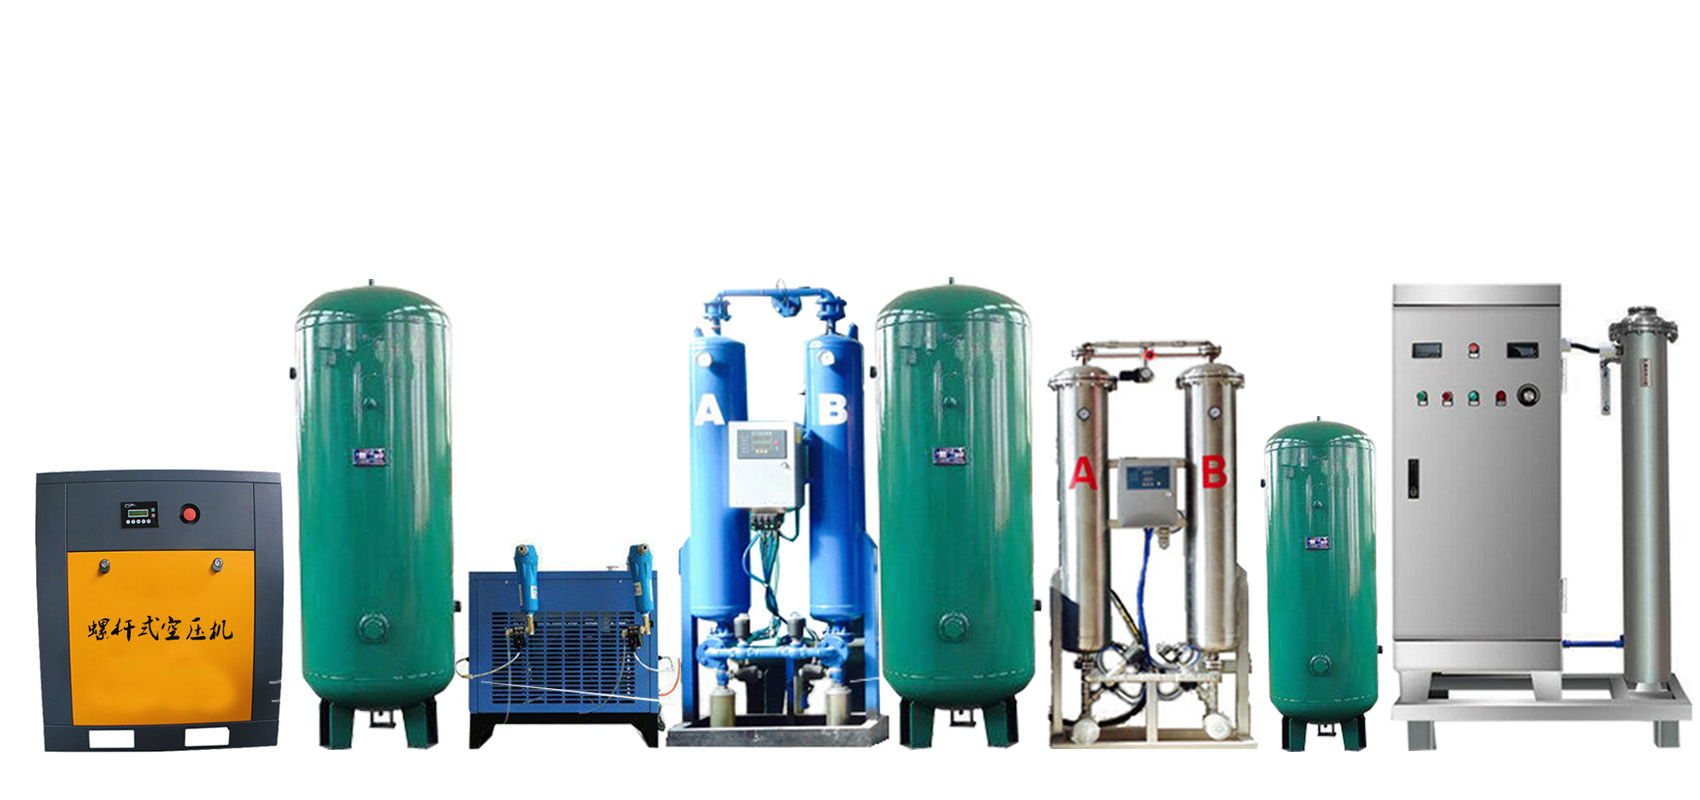 YT-021-1000A臭氧发生器 广东专业生产公斤级臭氧发生器 1000克臭氧发生器工厂